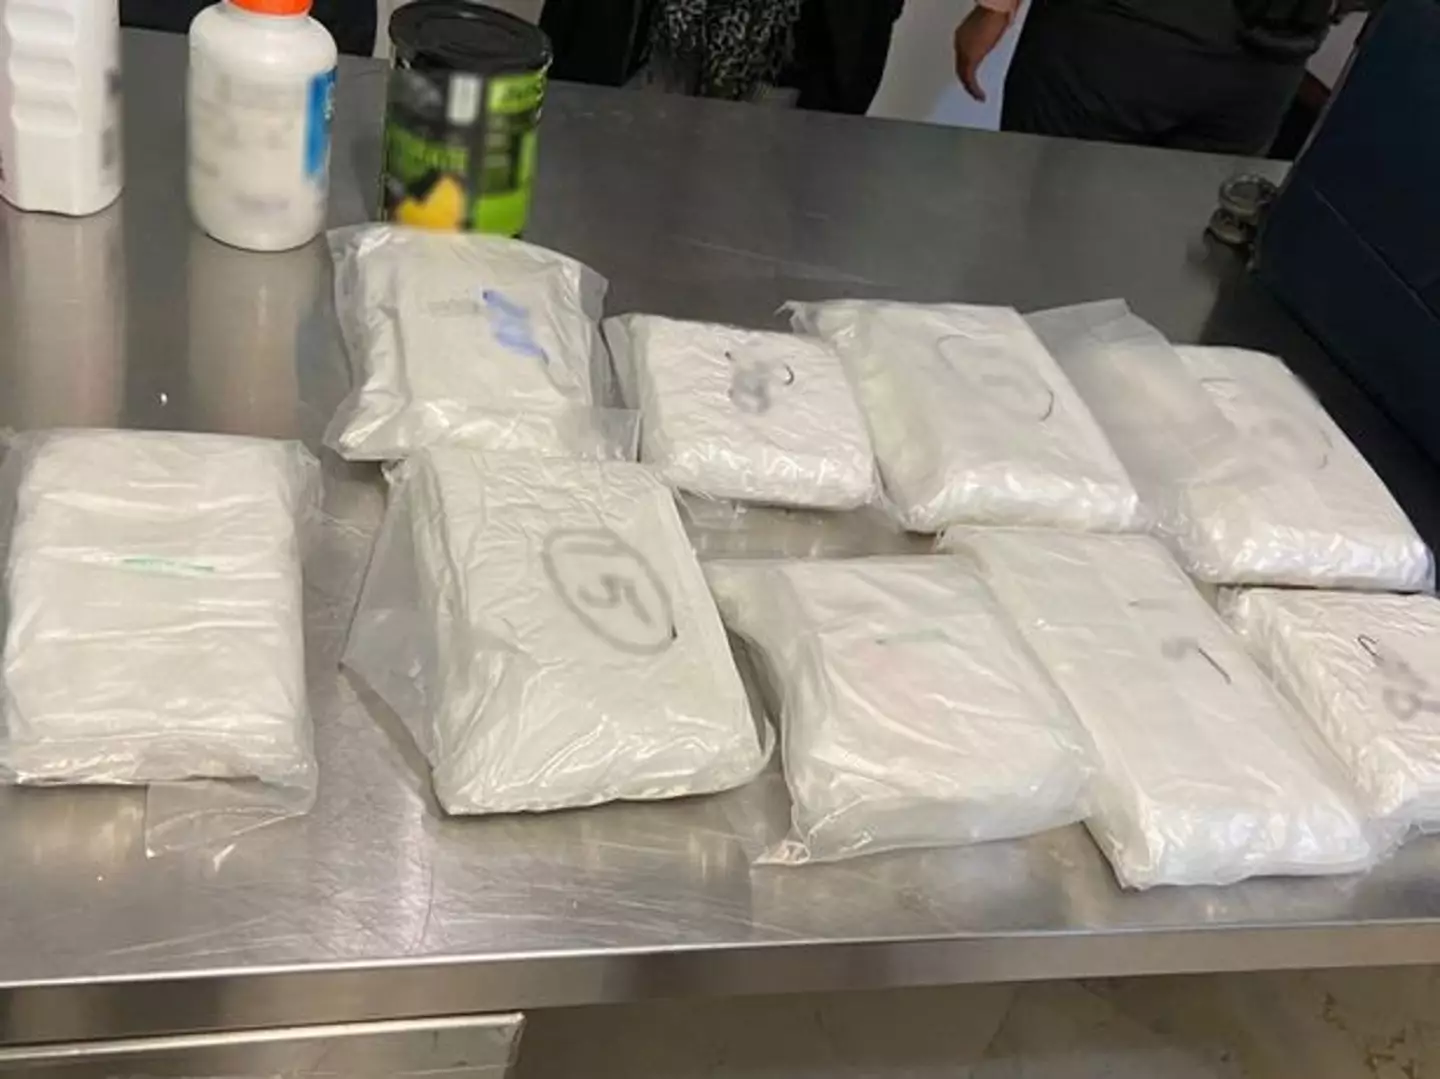 Police claim 10 kilos of powder with cocaine-like 'characteristics' were found.